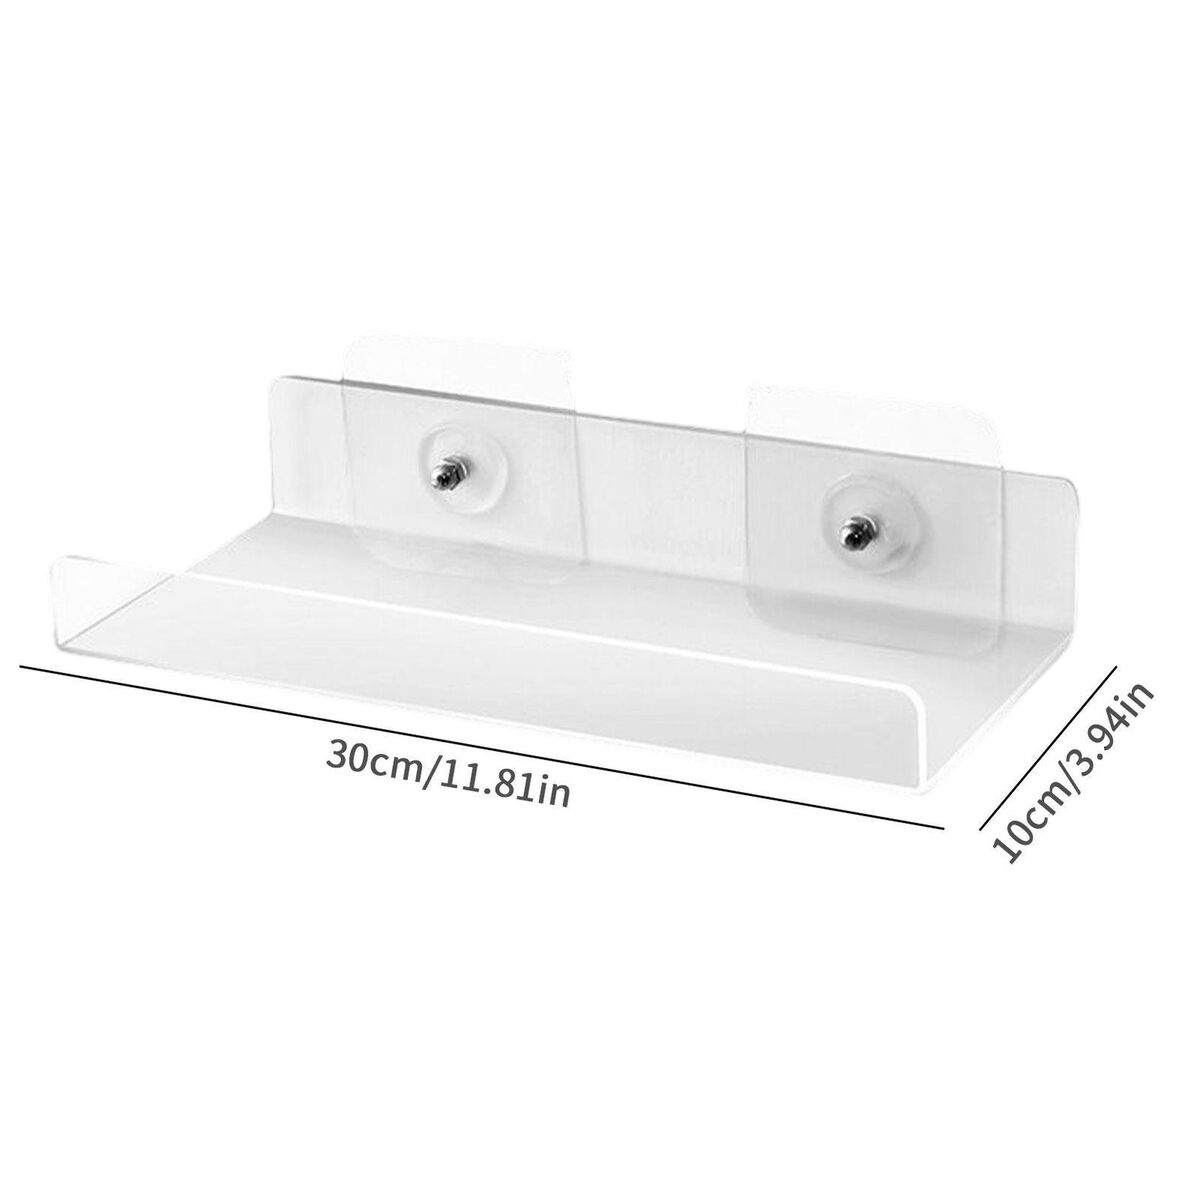 Acrylic Bathroom Shelves 1Pack Clear Shower Floating Shelf w/ Hooks No  Drilling